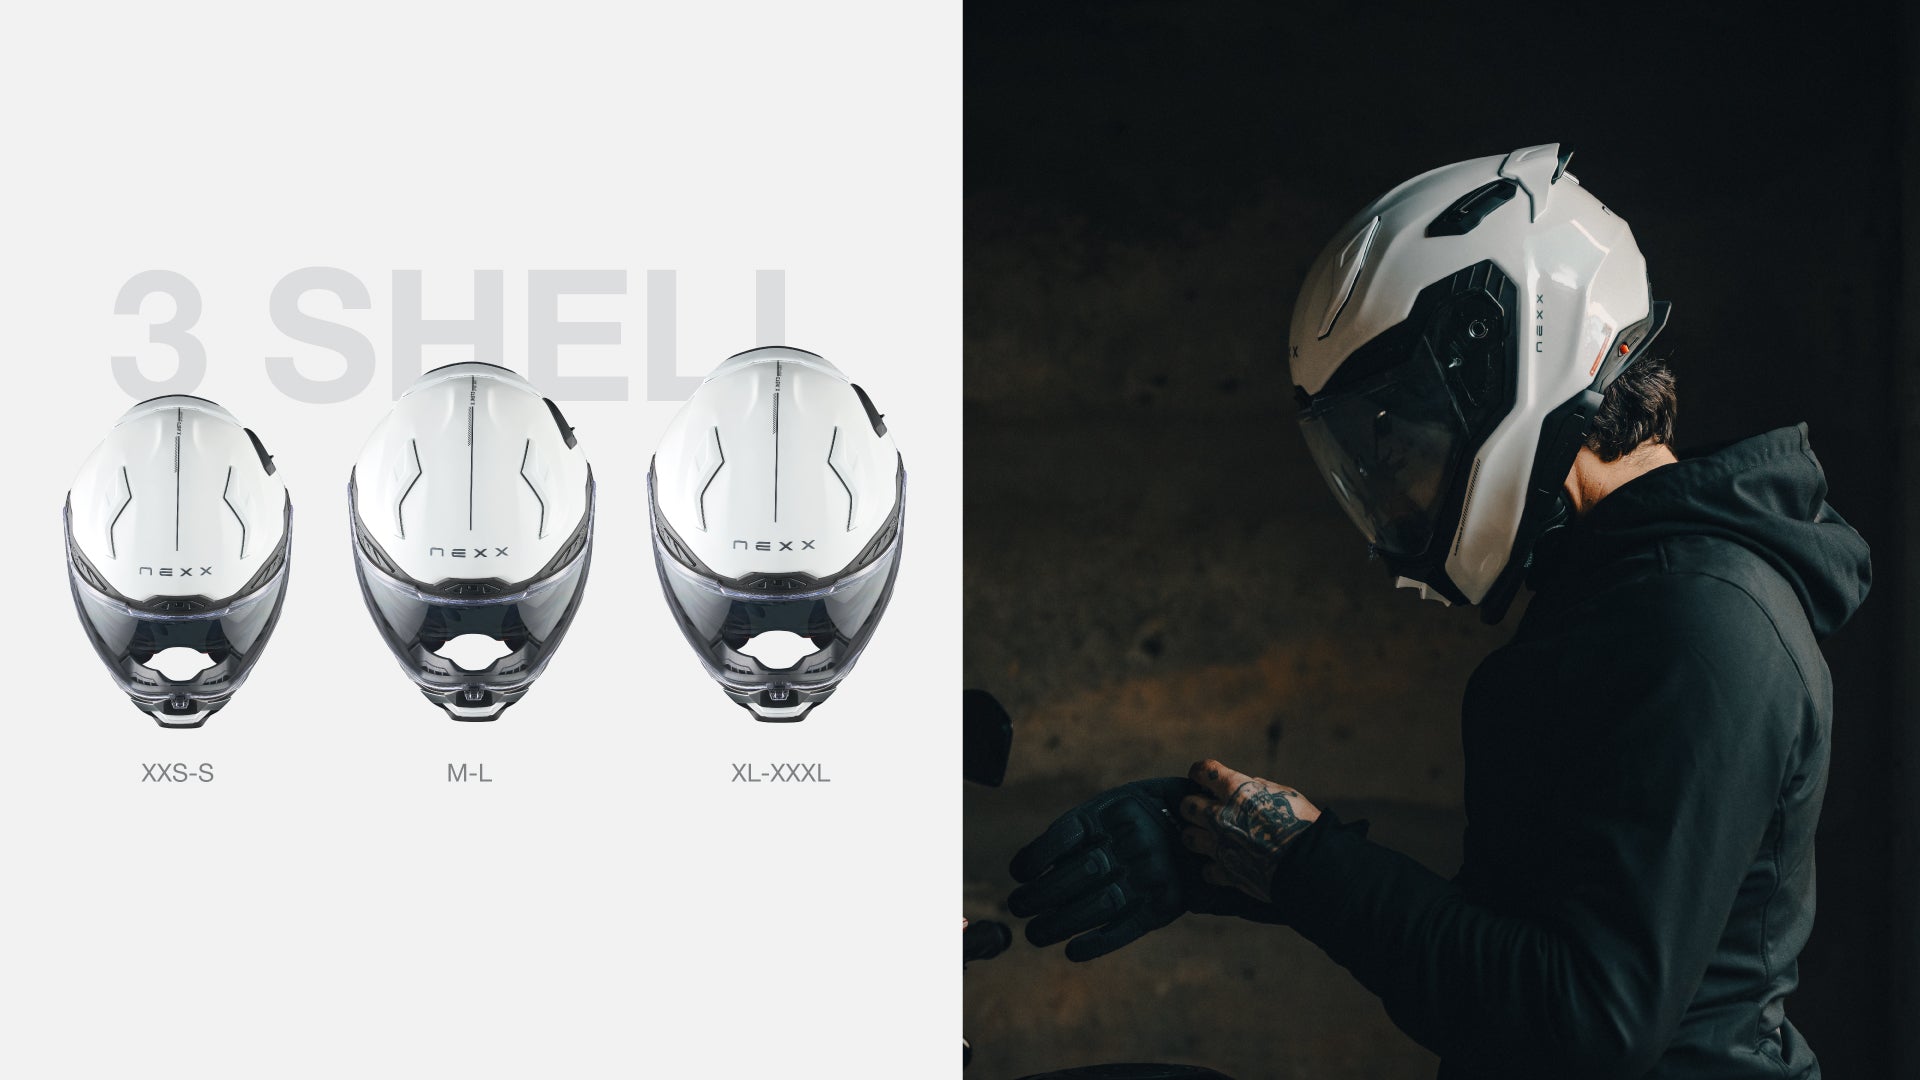 NEXX X.WST3 Fluence Helmet (3 Colors)